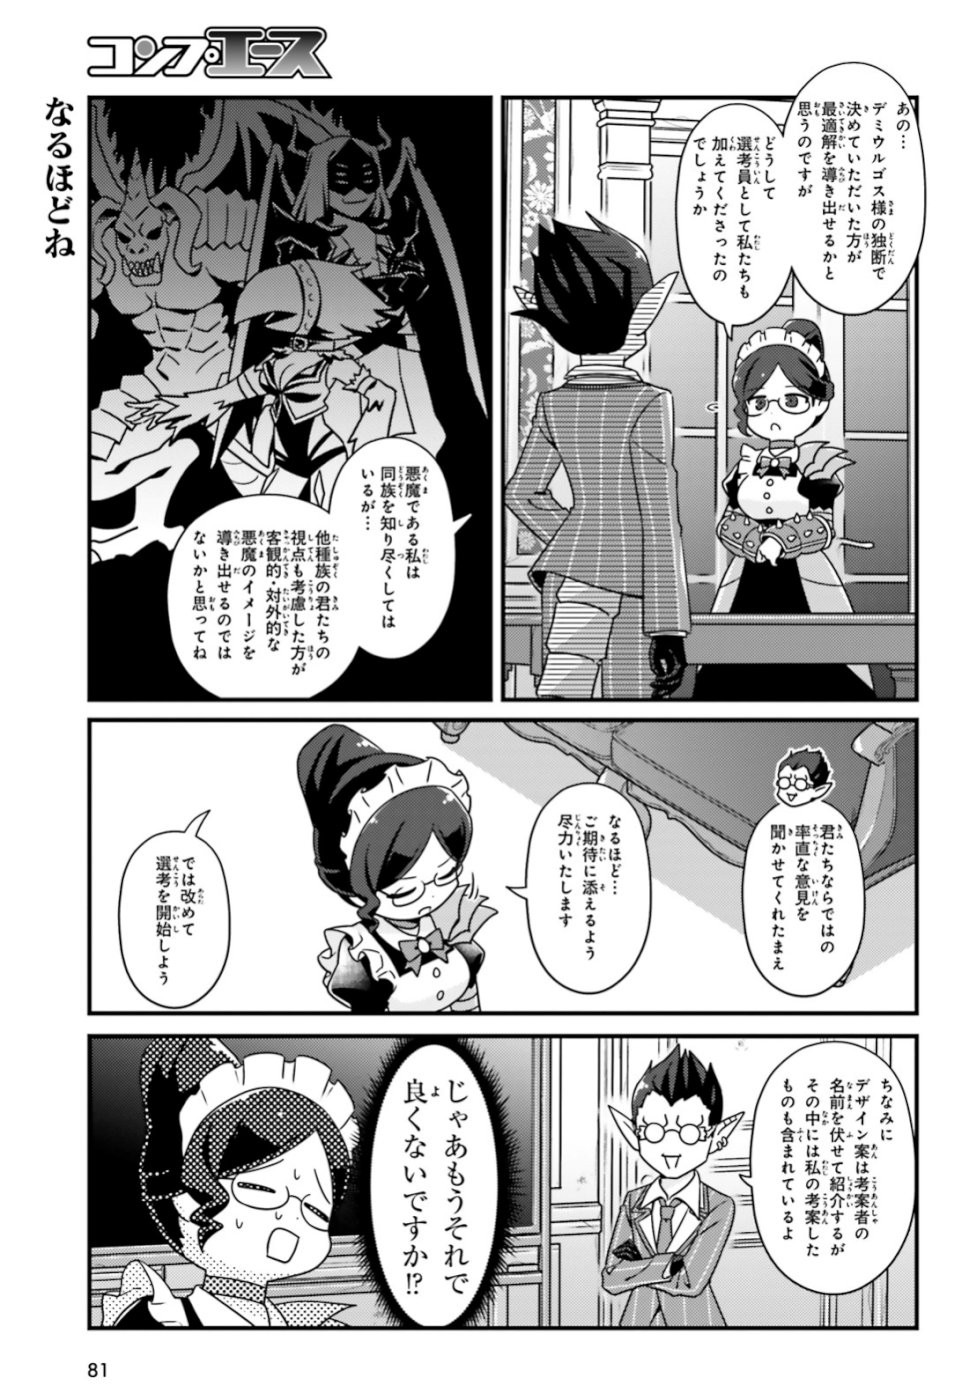 Overlord-Fushisha-no-Oh - Chapter 32-1 - Page 5